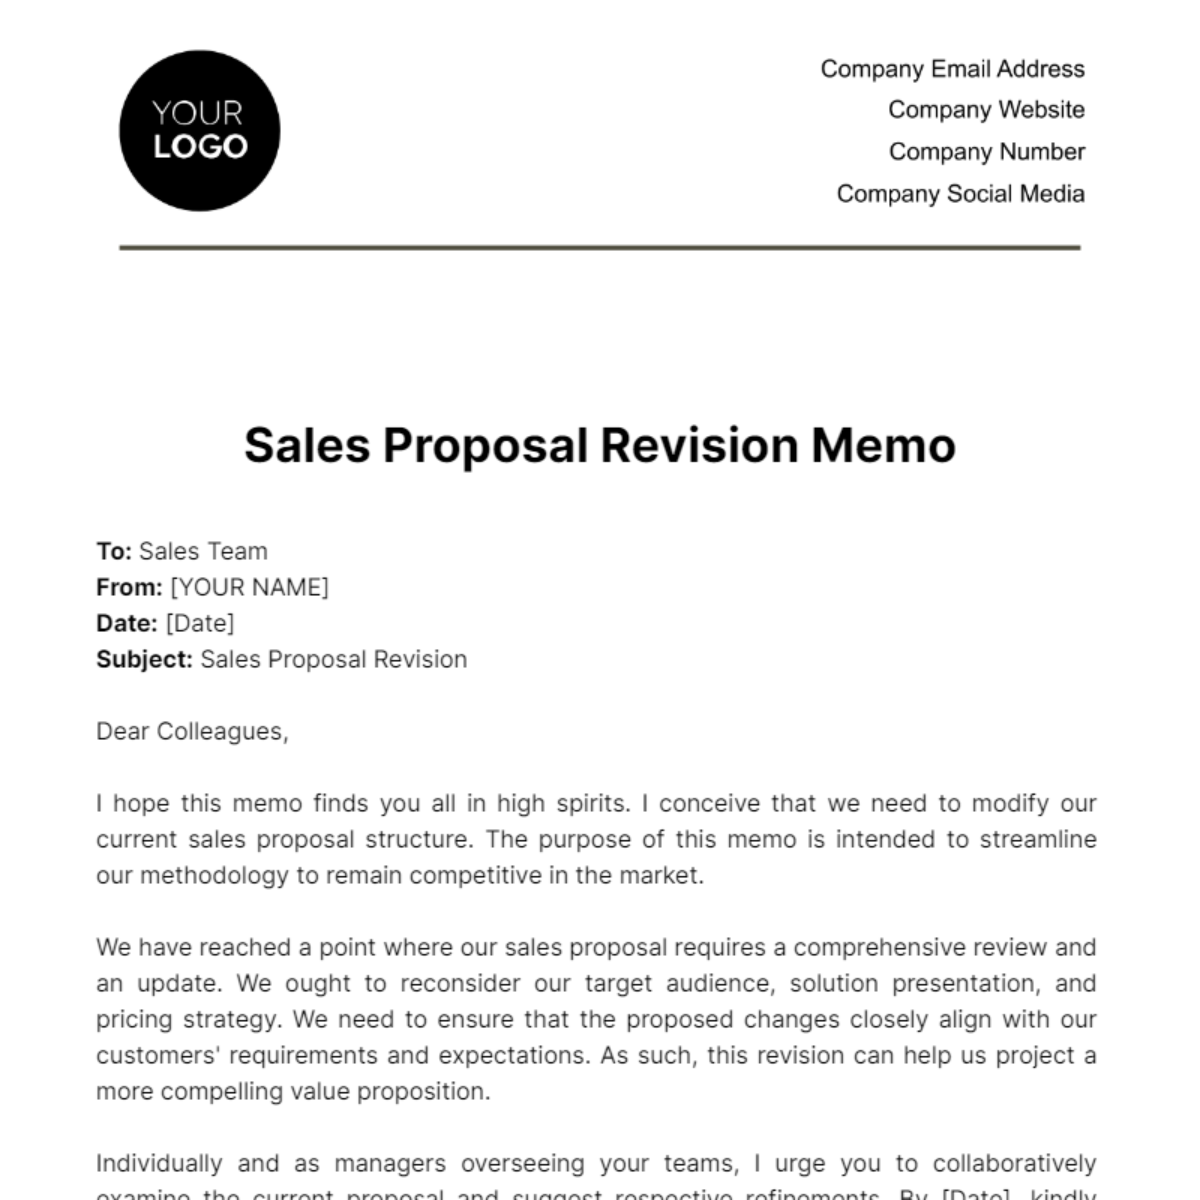 Sales Proposal Revision Memo Template